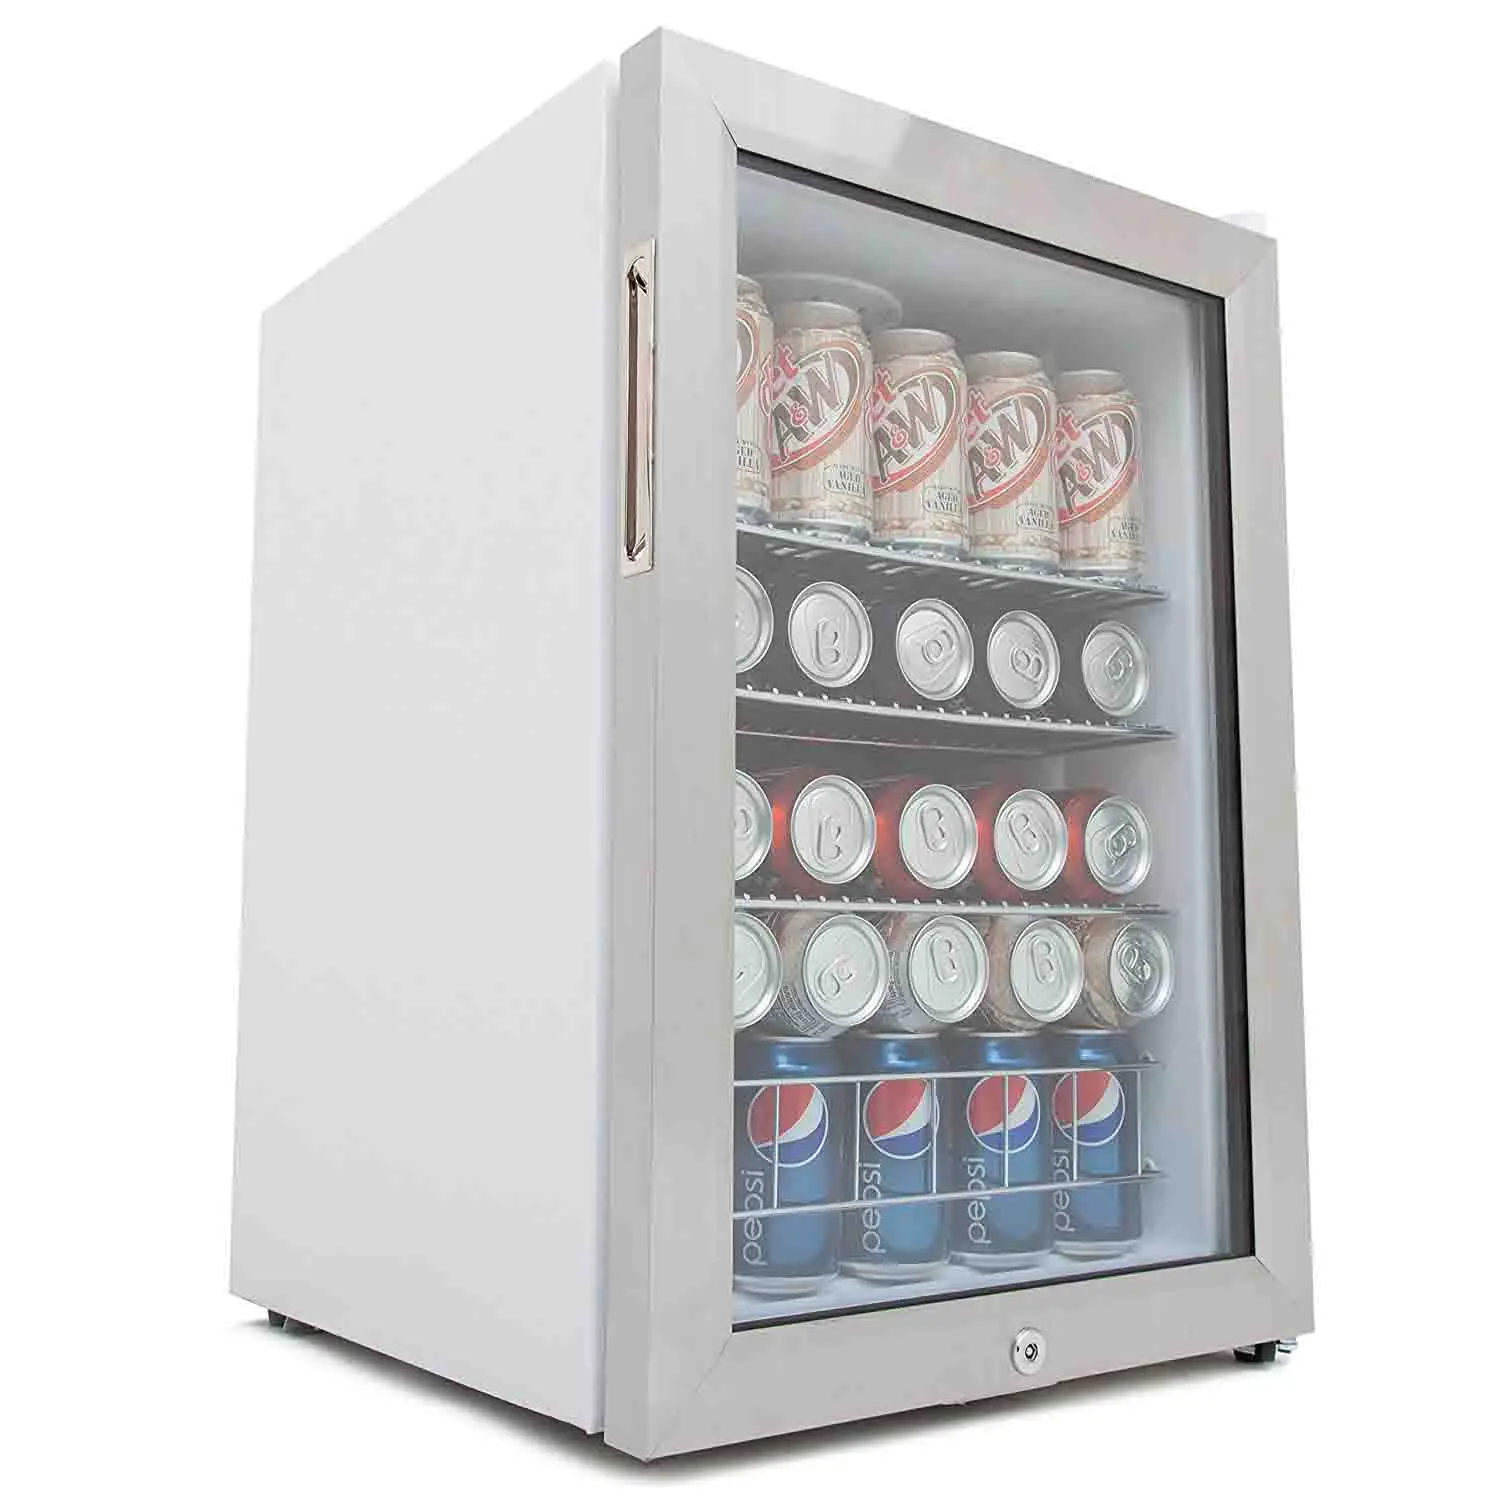 Energy Drink Display Fridge Mini Bar Fridge Cold Drink Refrigerator With Lock,90 Can Capacity